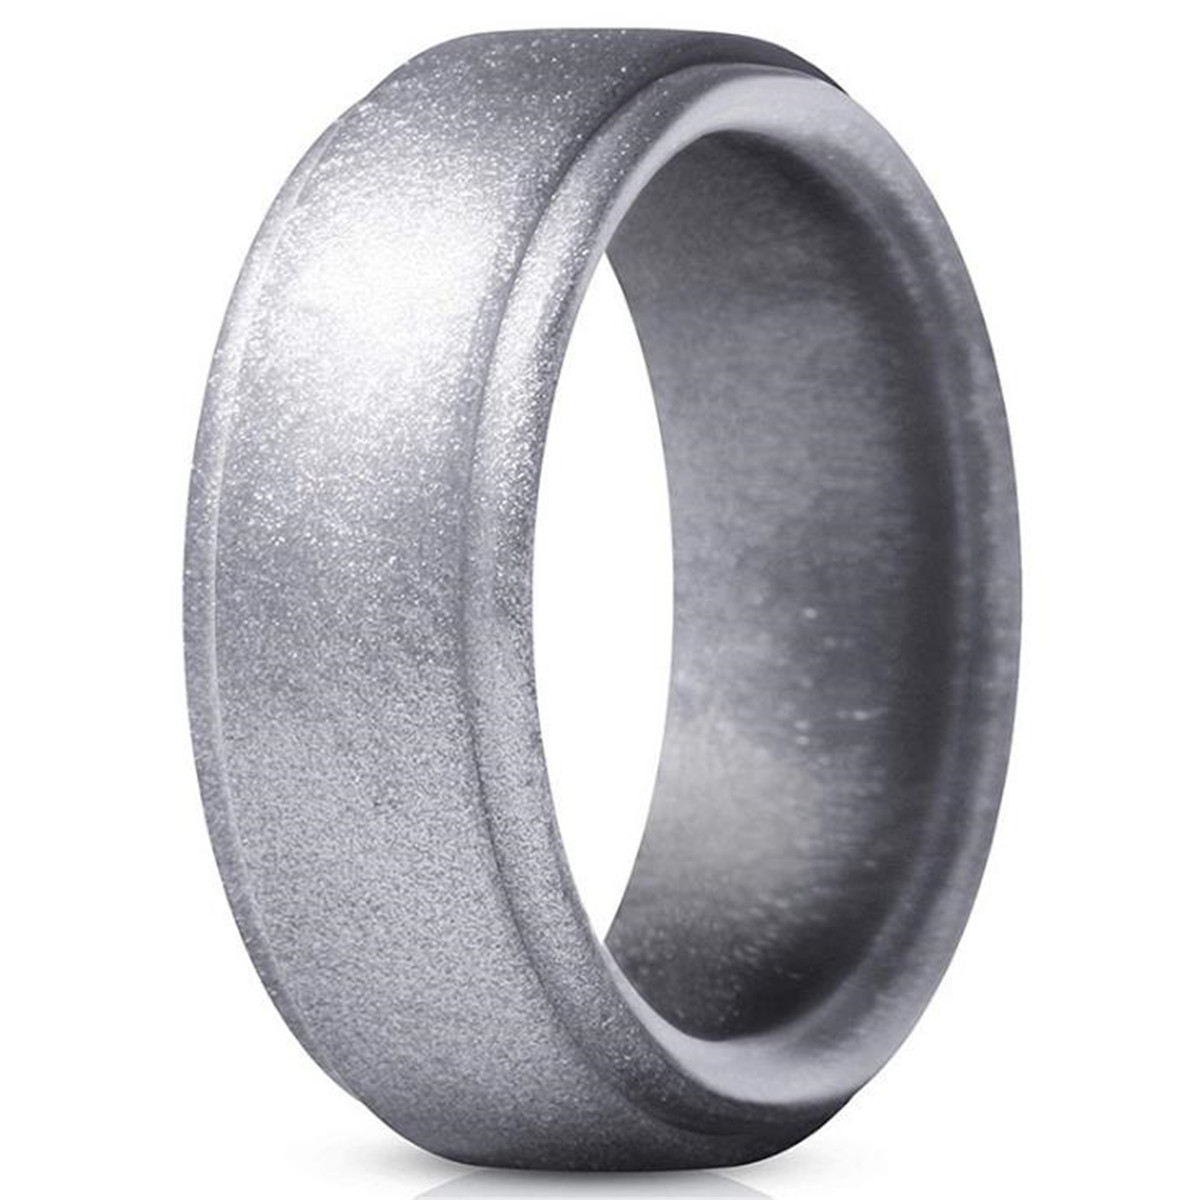 4PCS/Set Silicone Rubber Wedding Ring Bands Flexible Comfortable Safe ...